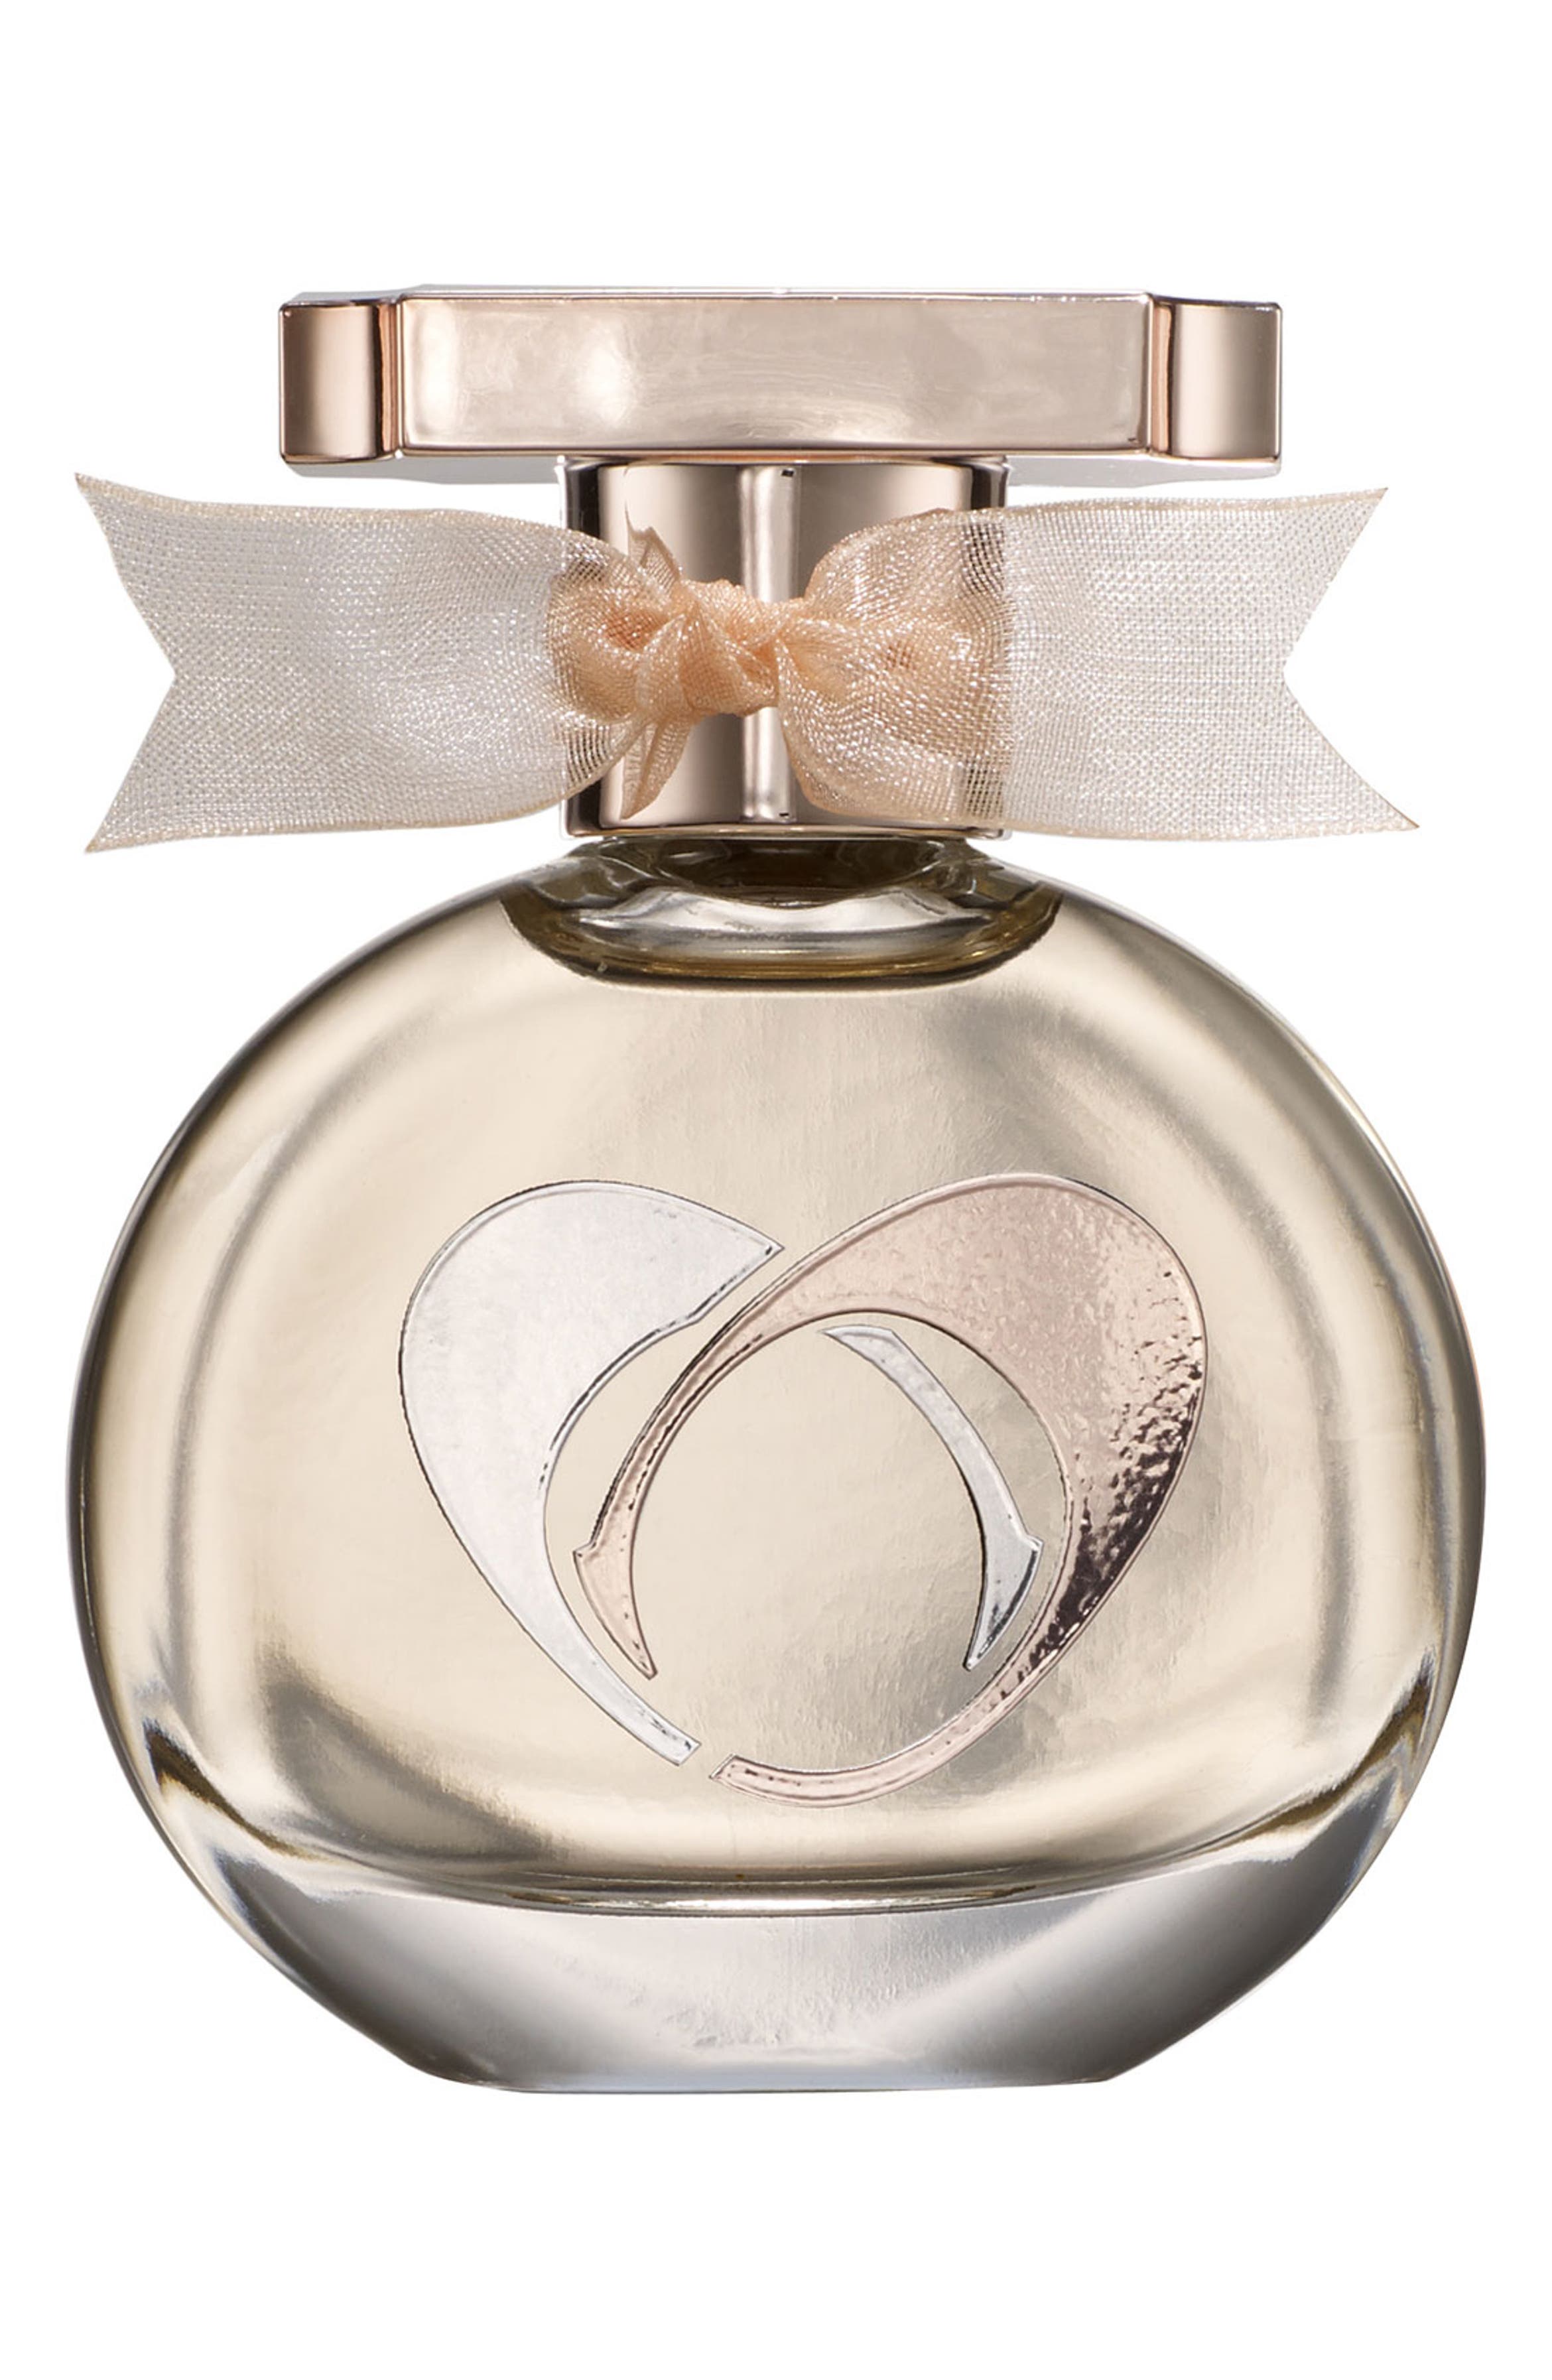 COACH 'Love' Eau de Parfum Spray Nordstrom